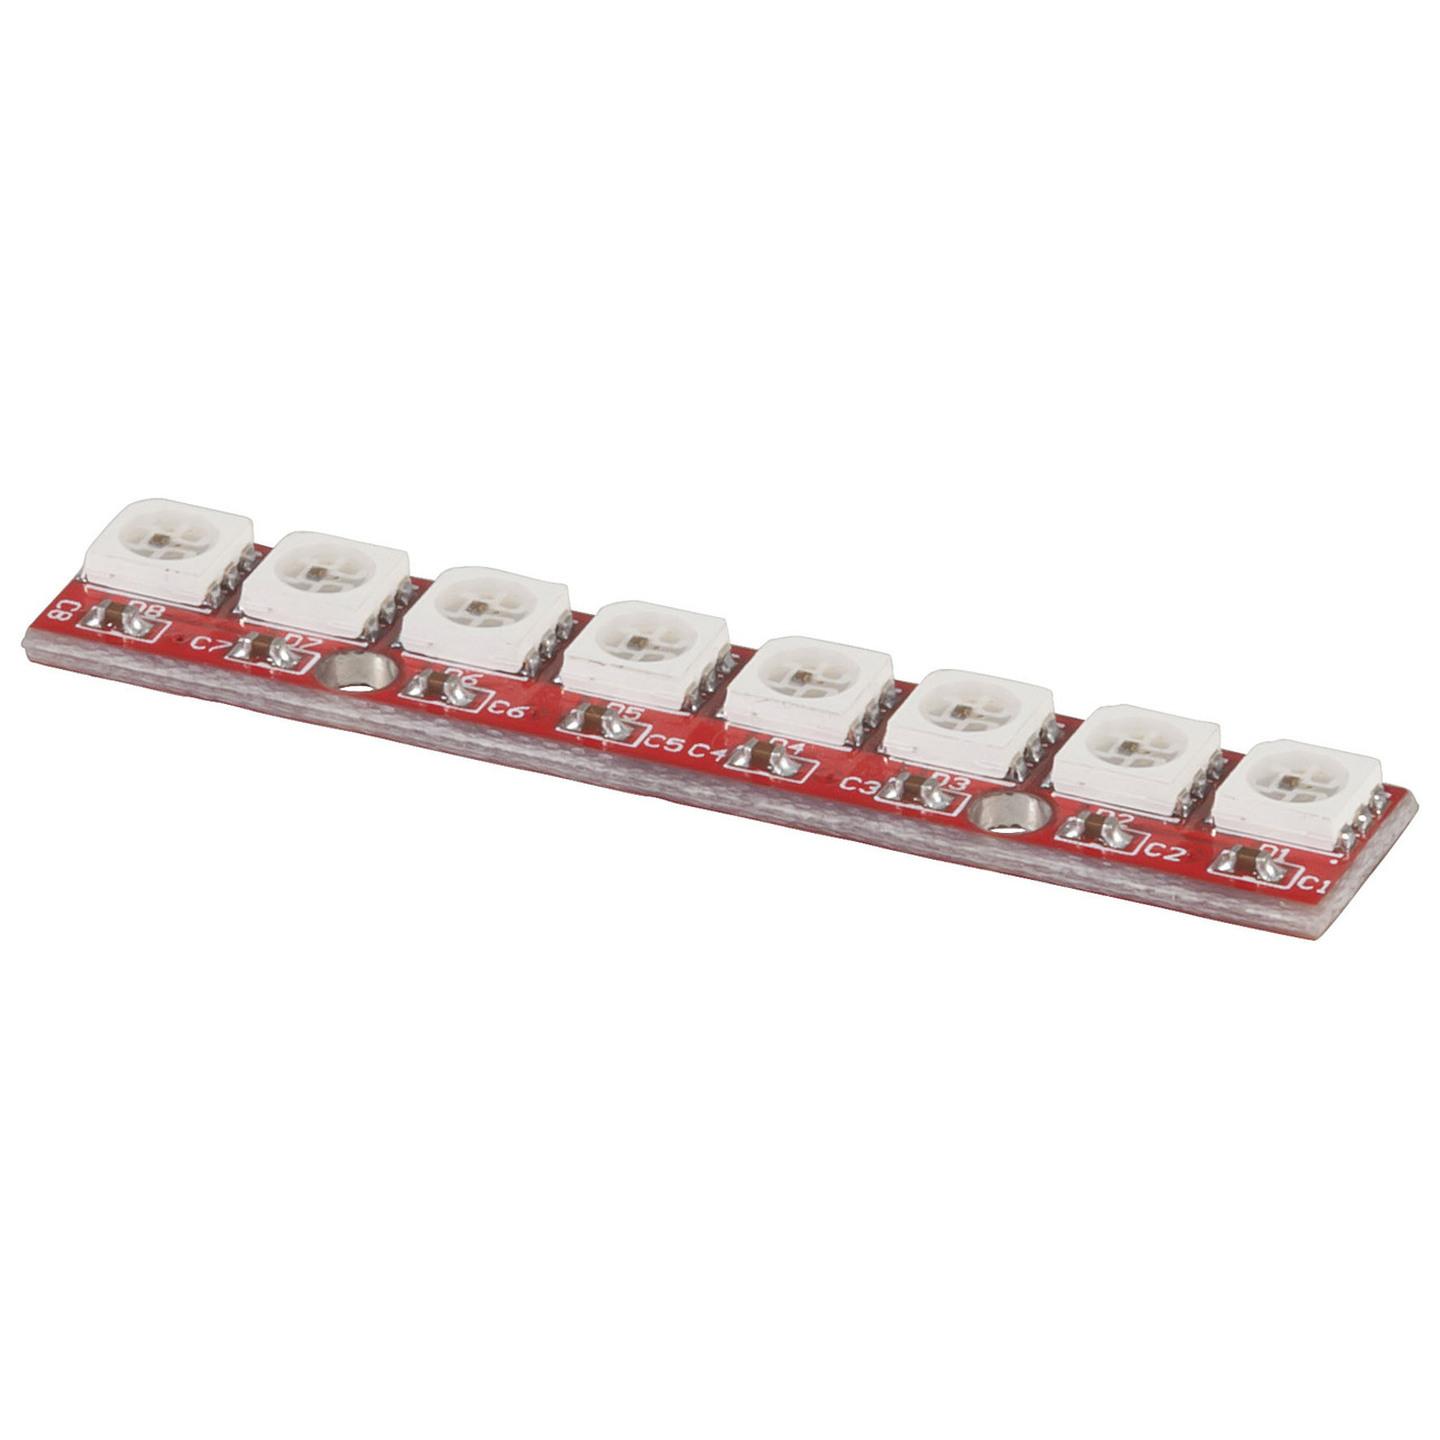 Duinotech Arduino Compatible WS2812B RGB LED Strip